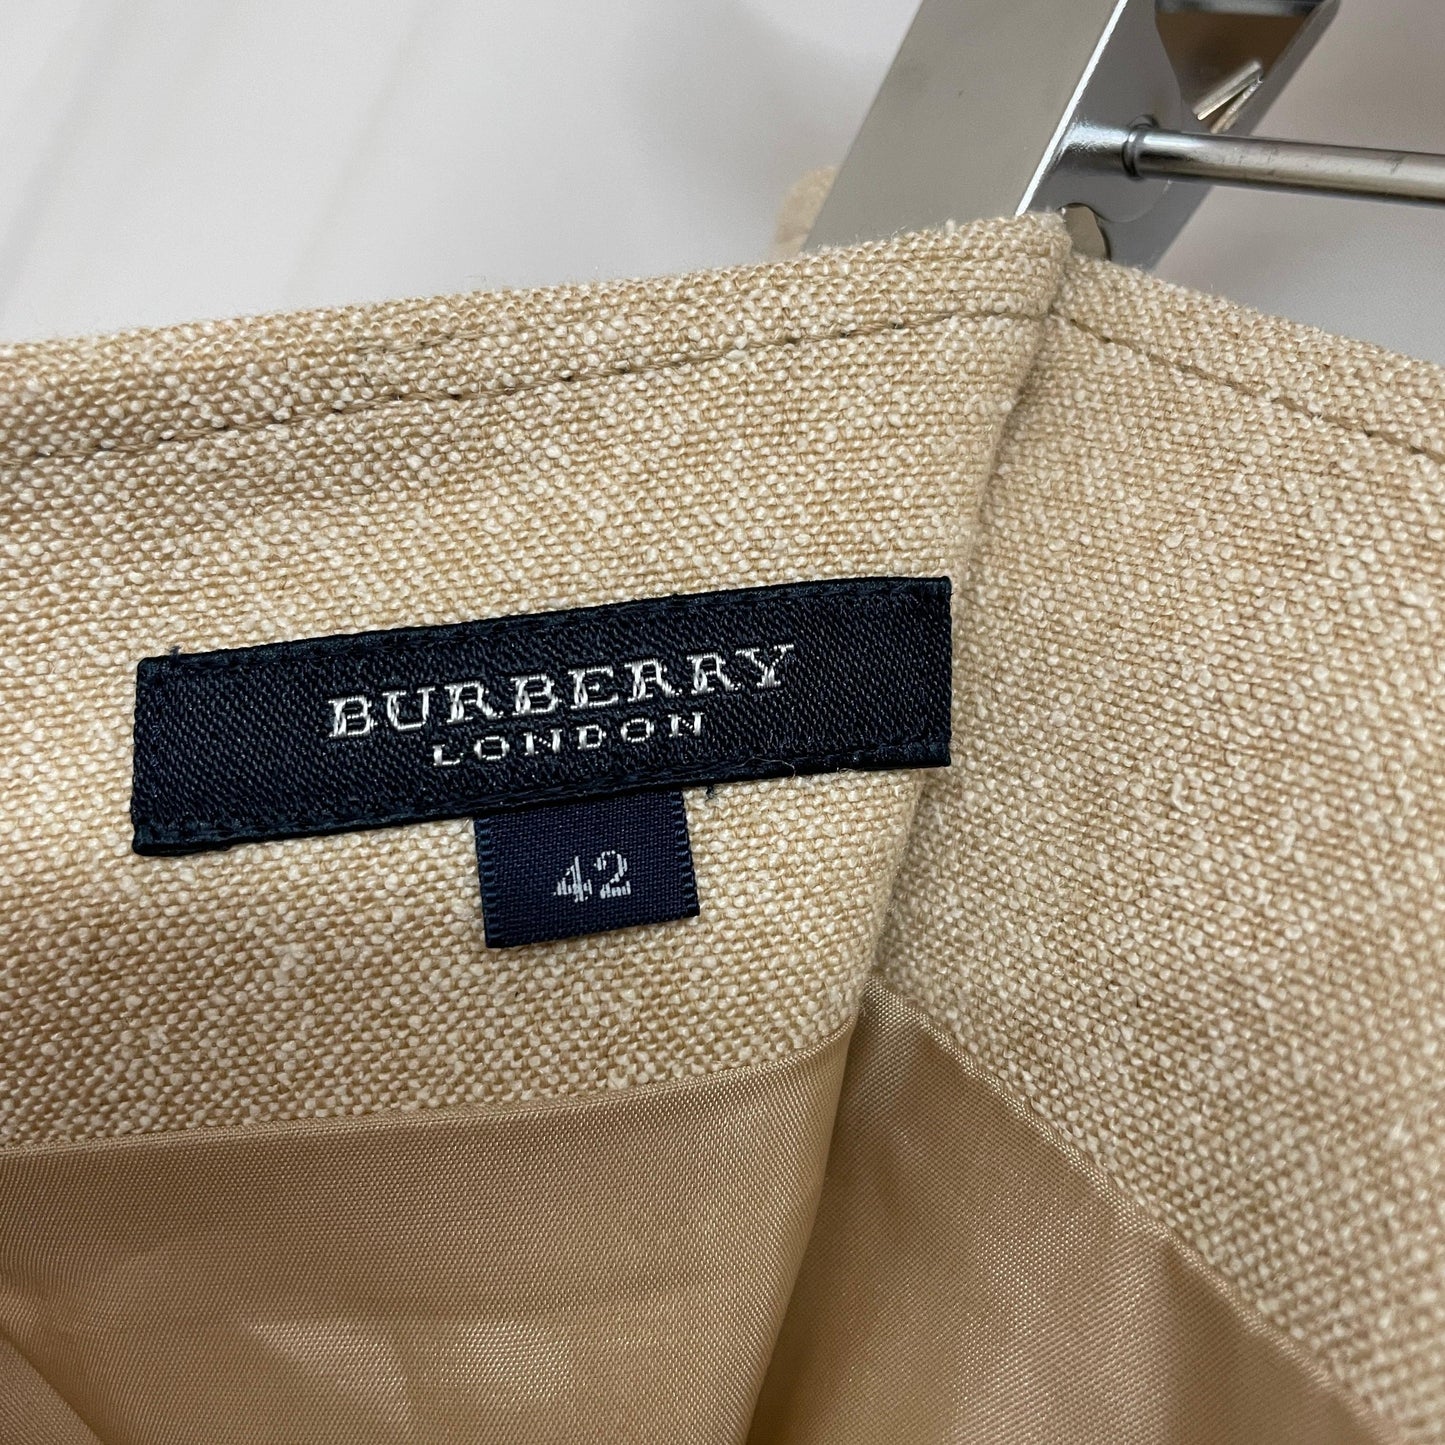 Burberry london スカート